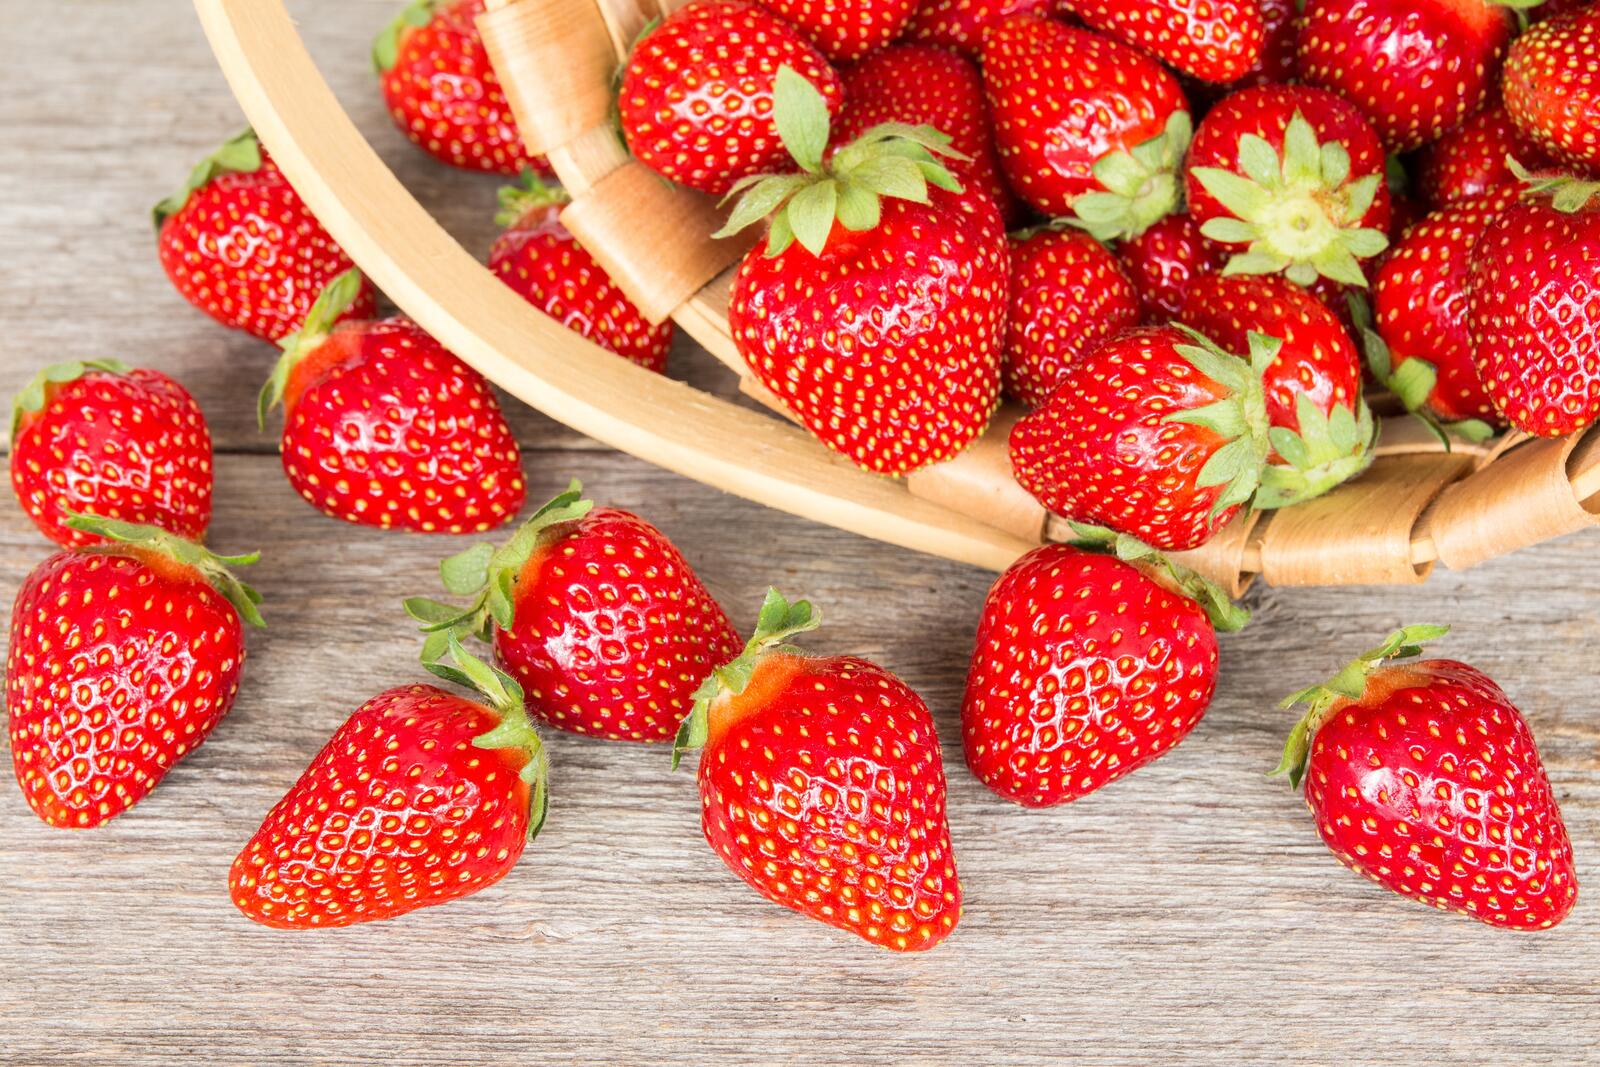 Wallpapers wallpaper strawberries fruits food on the desktop